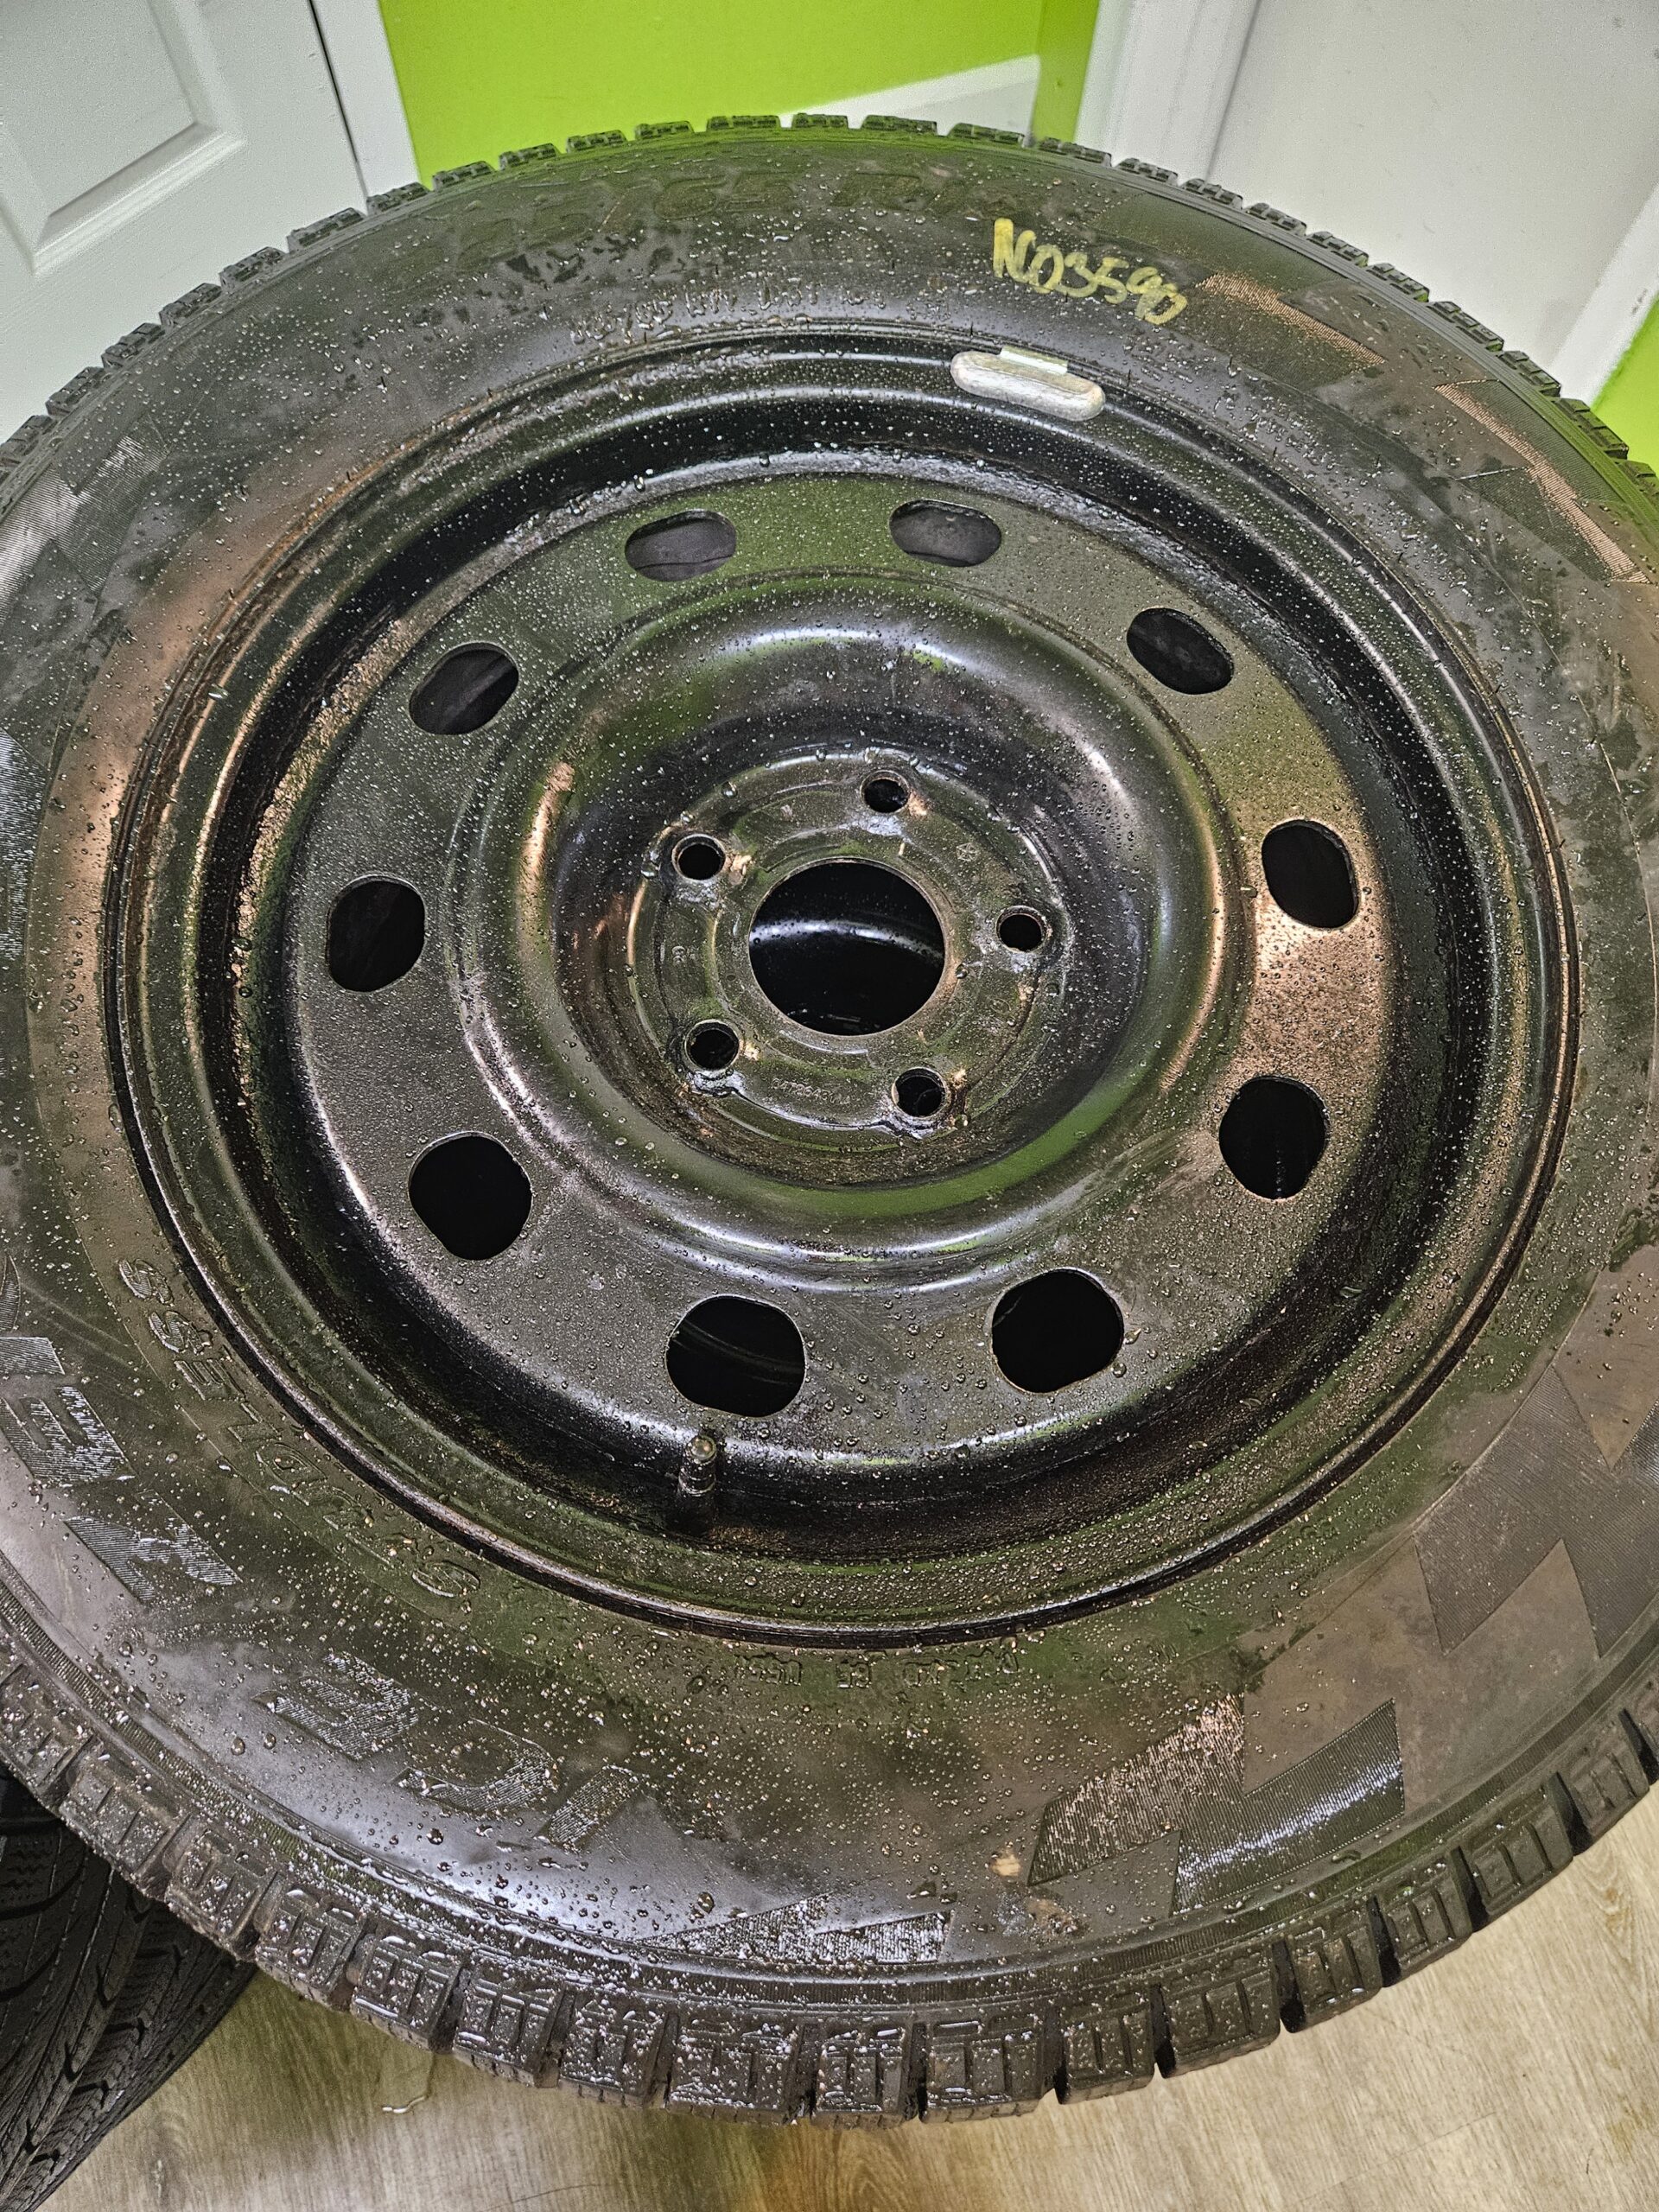 225/65R17 Pirelli Snow Tires